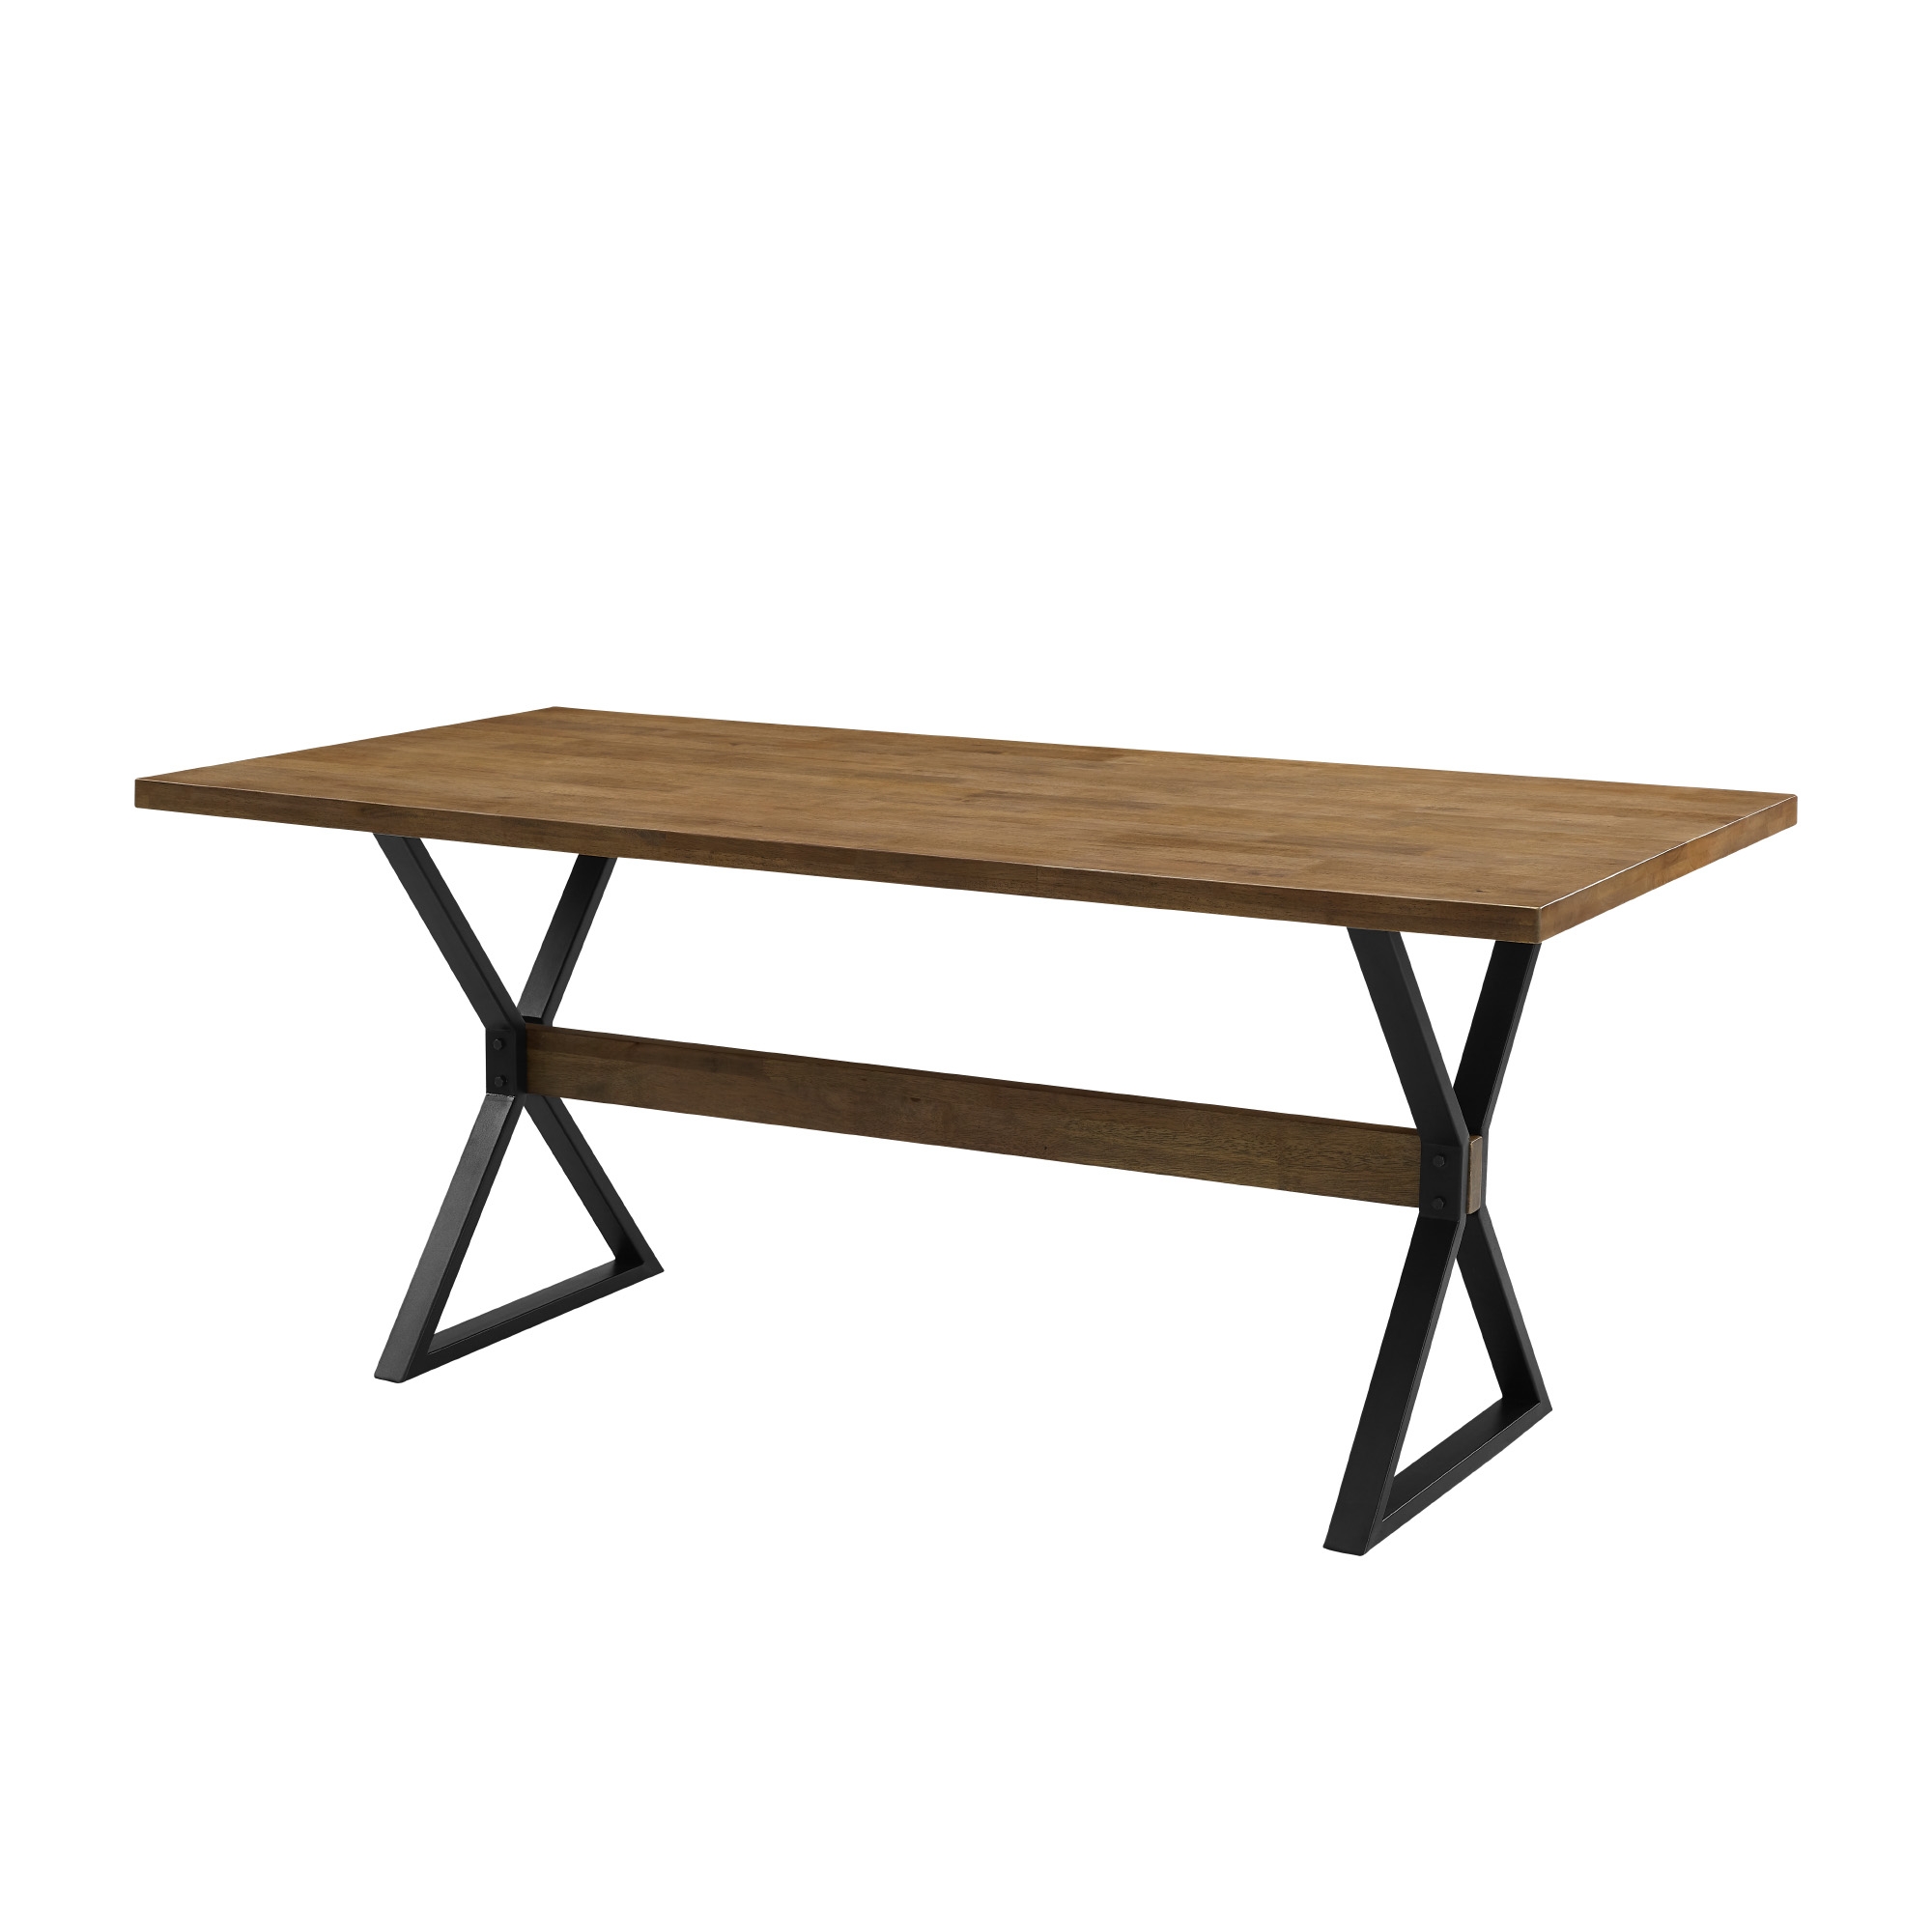 Amherst 72" X Leg Dining Table - Rustic Oak - Image 2